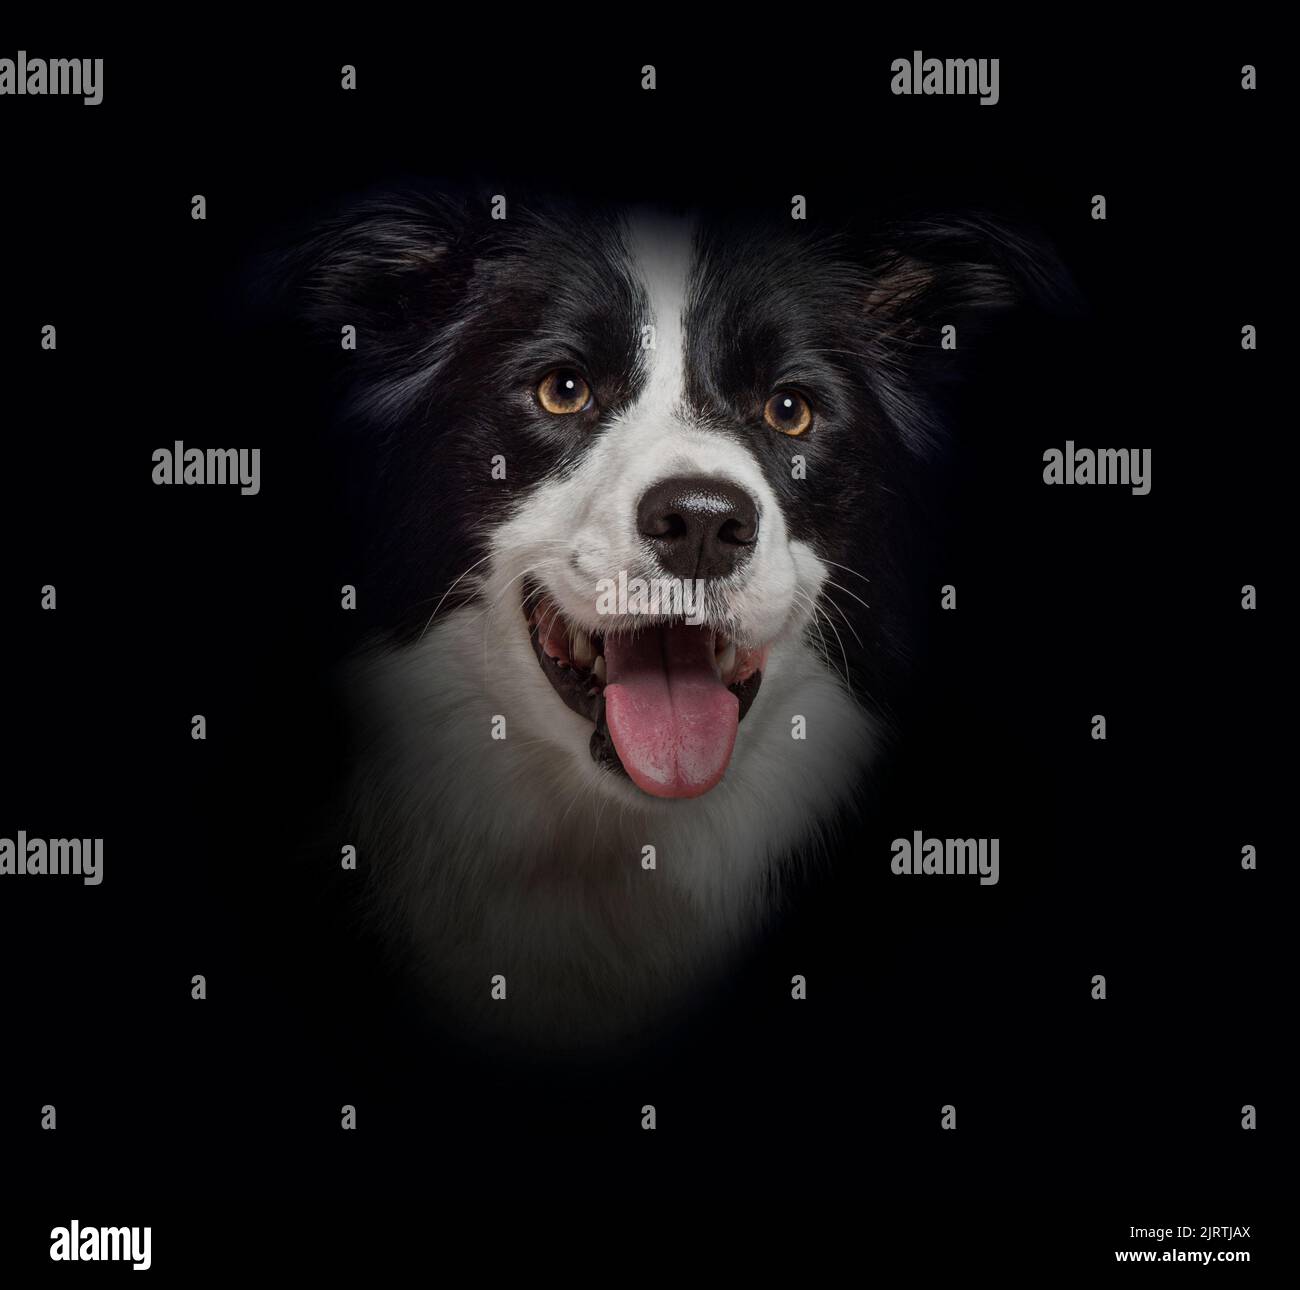 Close-up of Border Collie dog on black background Stock Photo